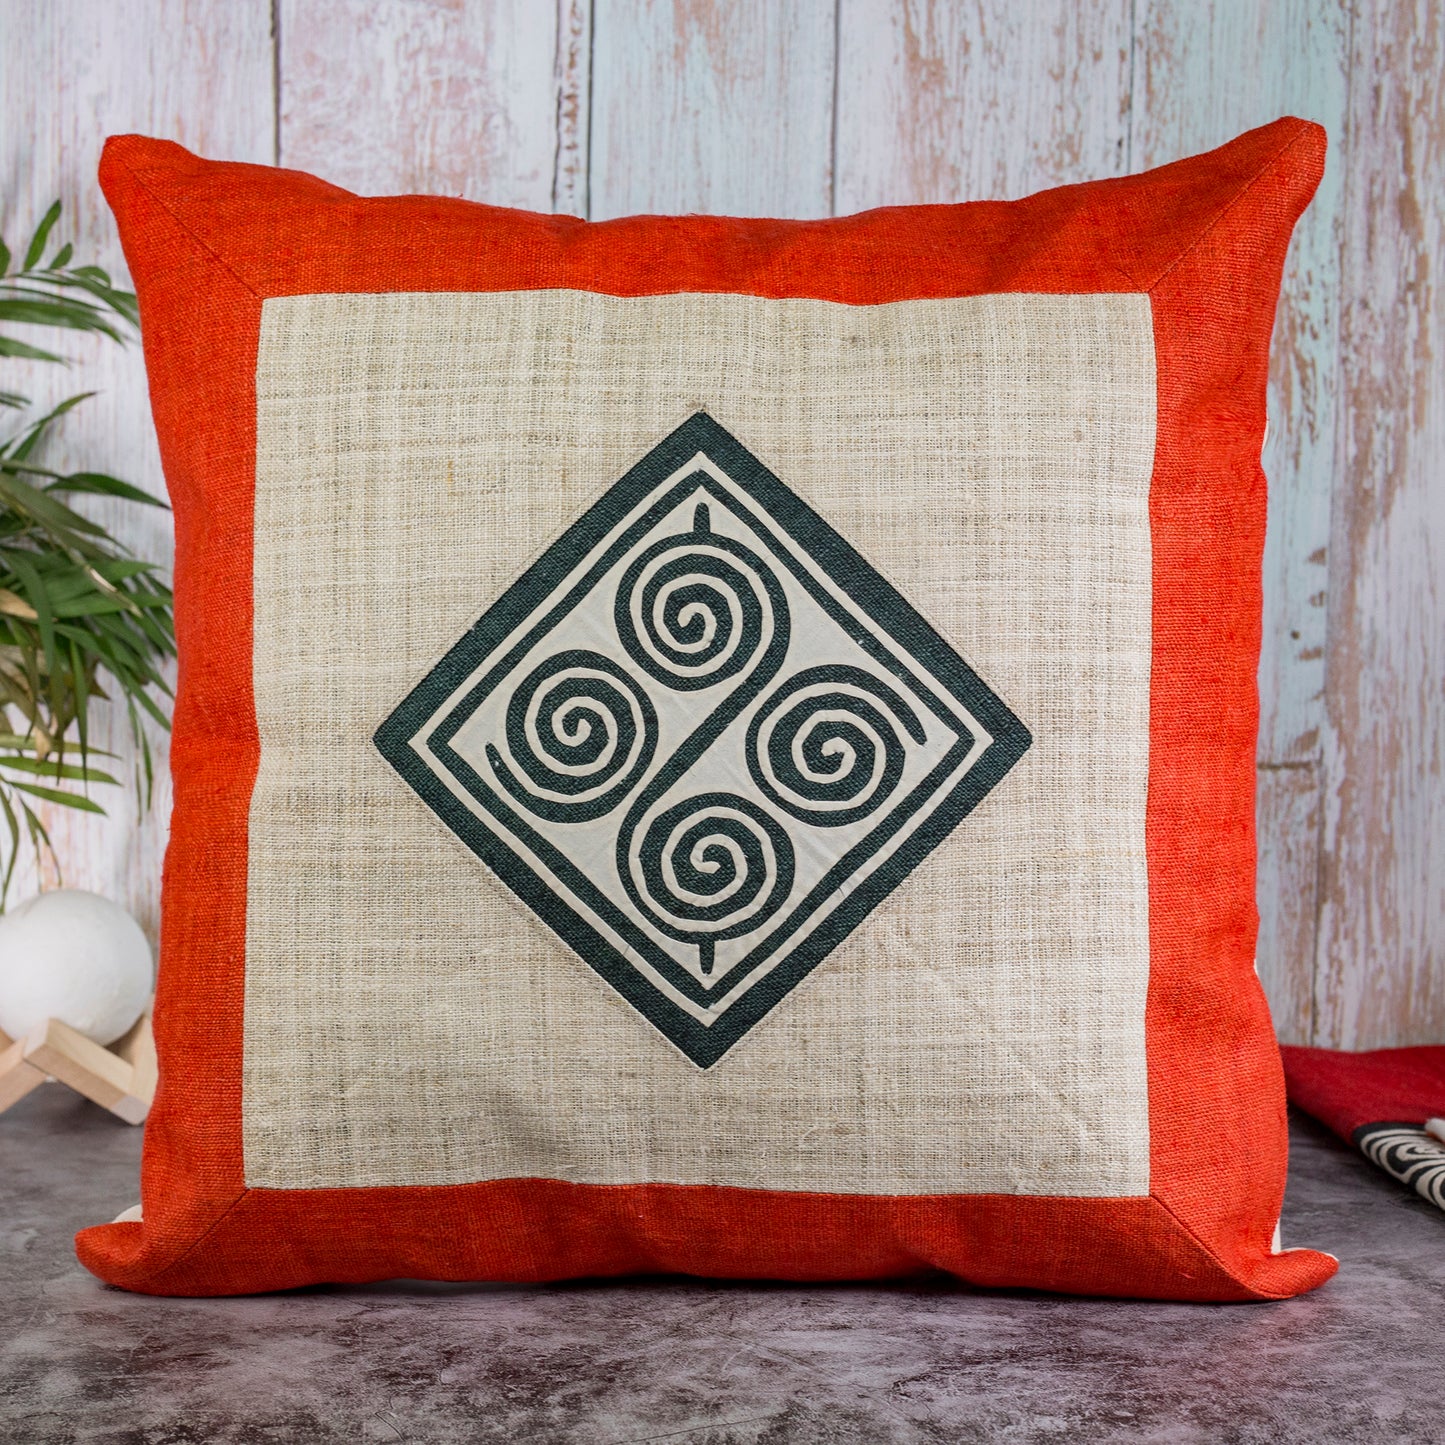 Hemp Cushion Cover in Red- 100% handmade, beige hemp, black and white pattern at center